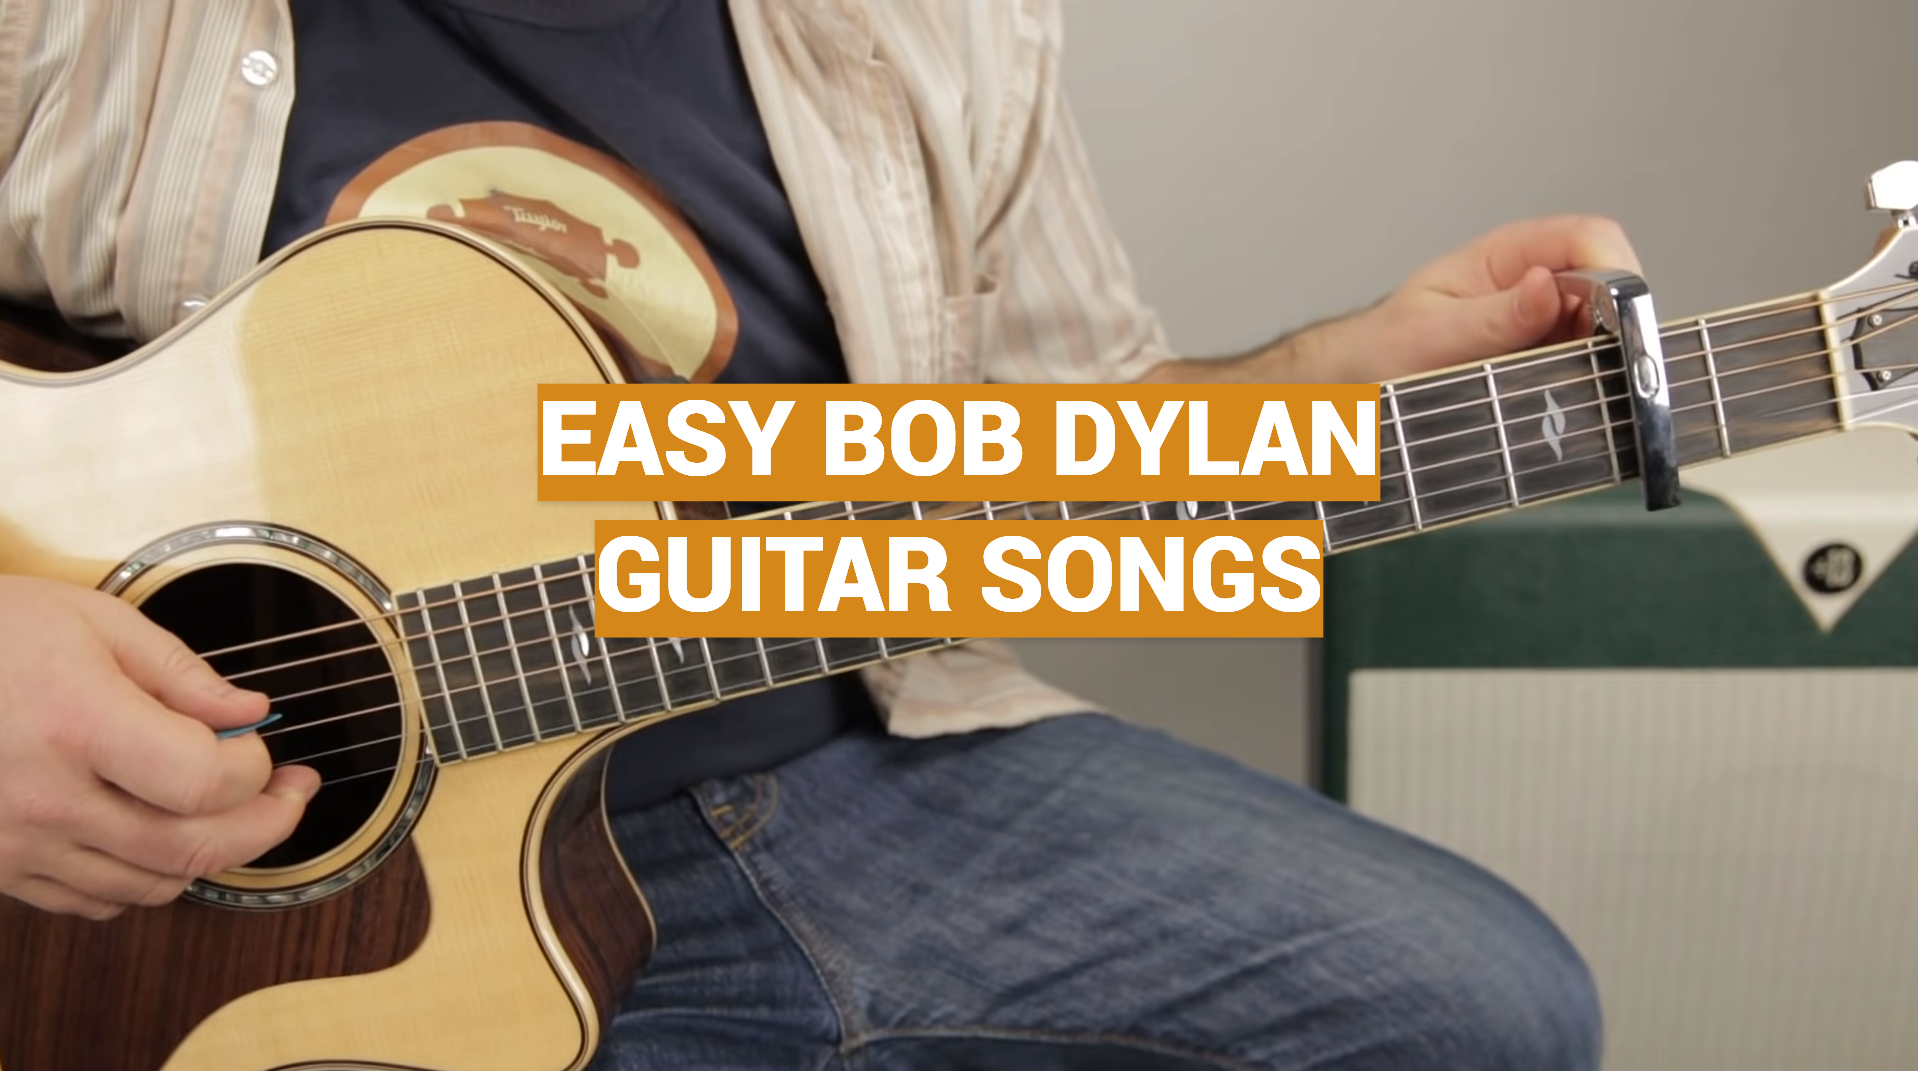 Easy Bob Dylan Guitar Songs